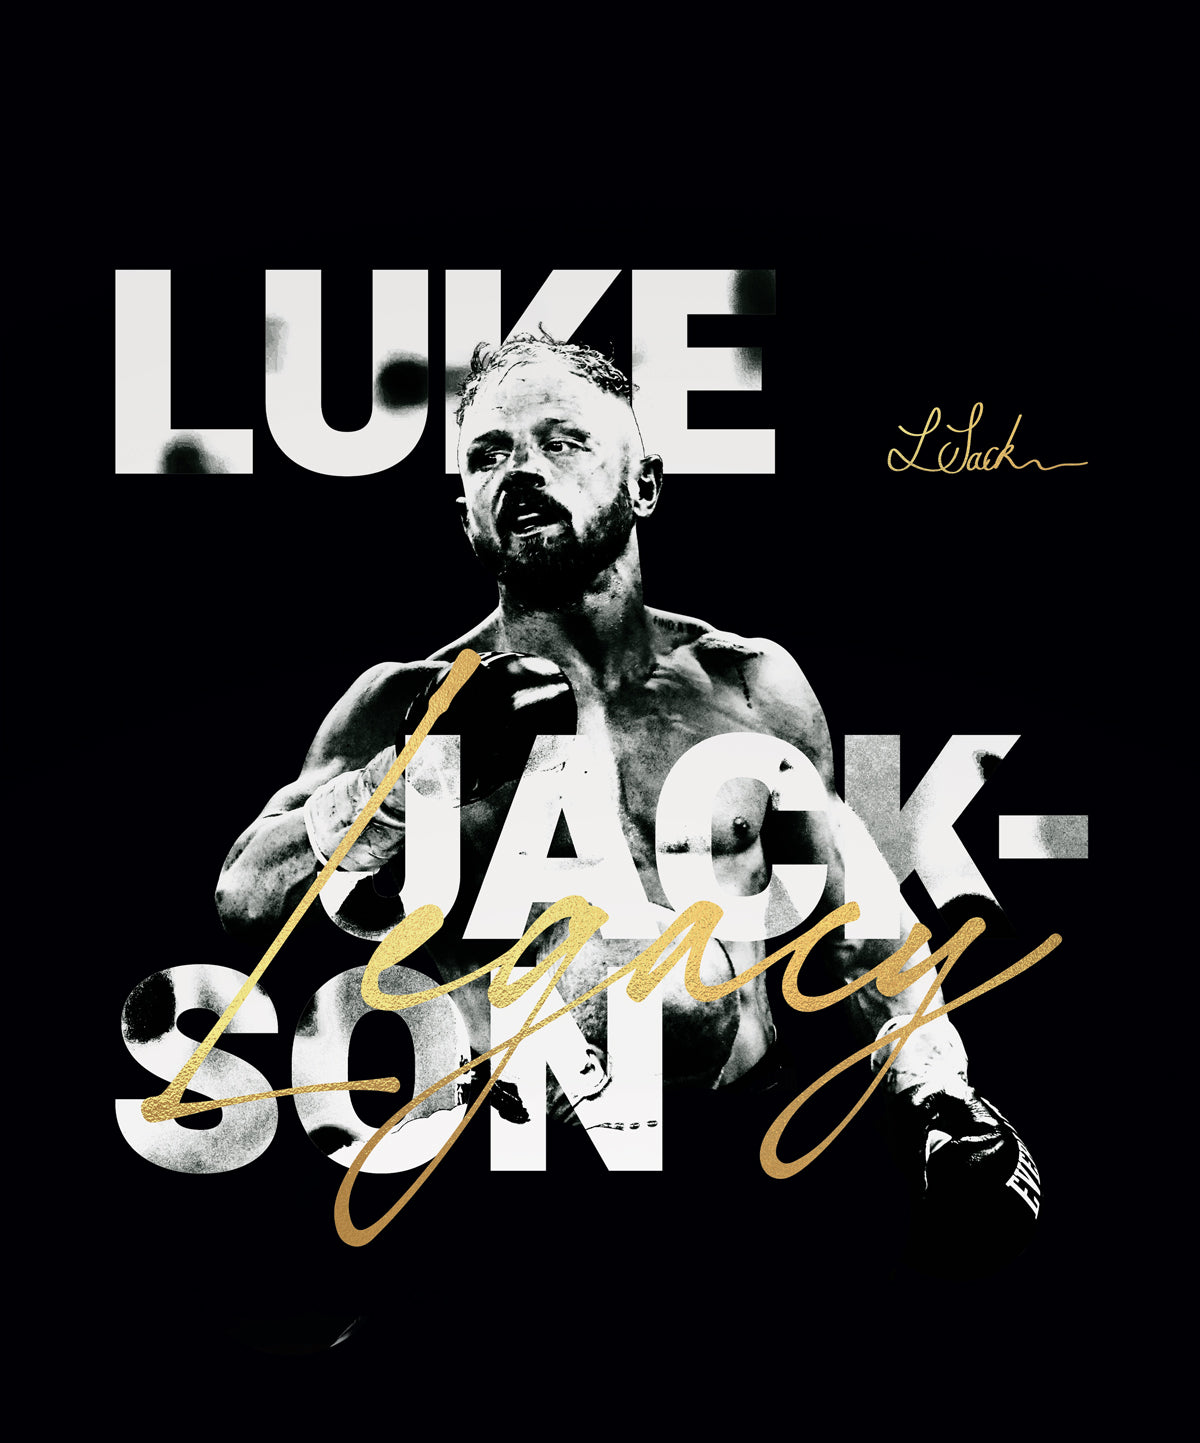 PRE ORDER – LUKE JACKSON LEGACY Classic Tee in Black